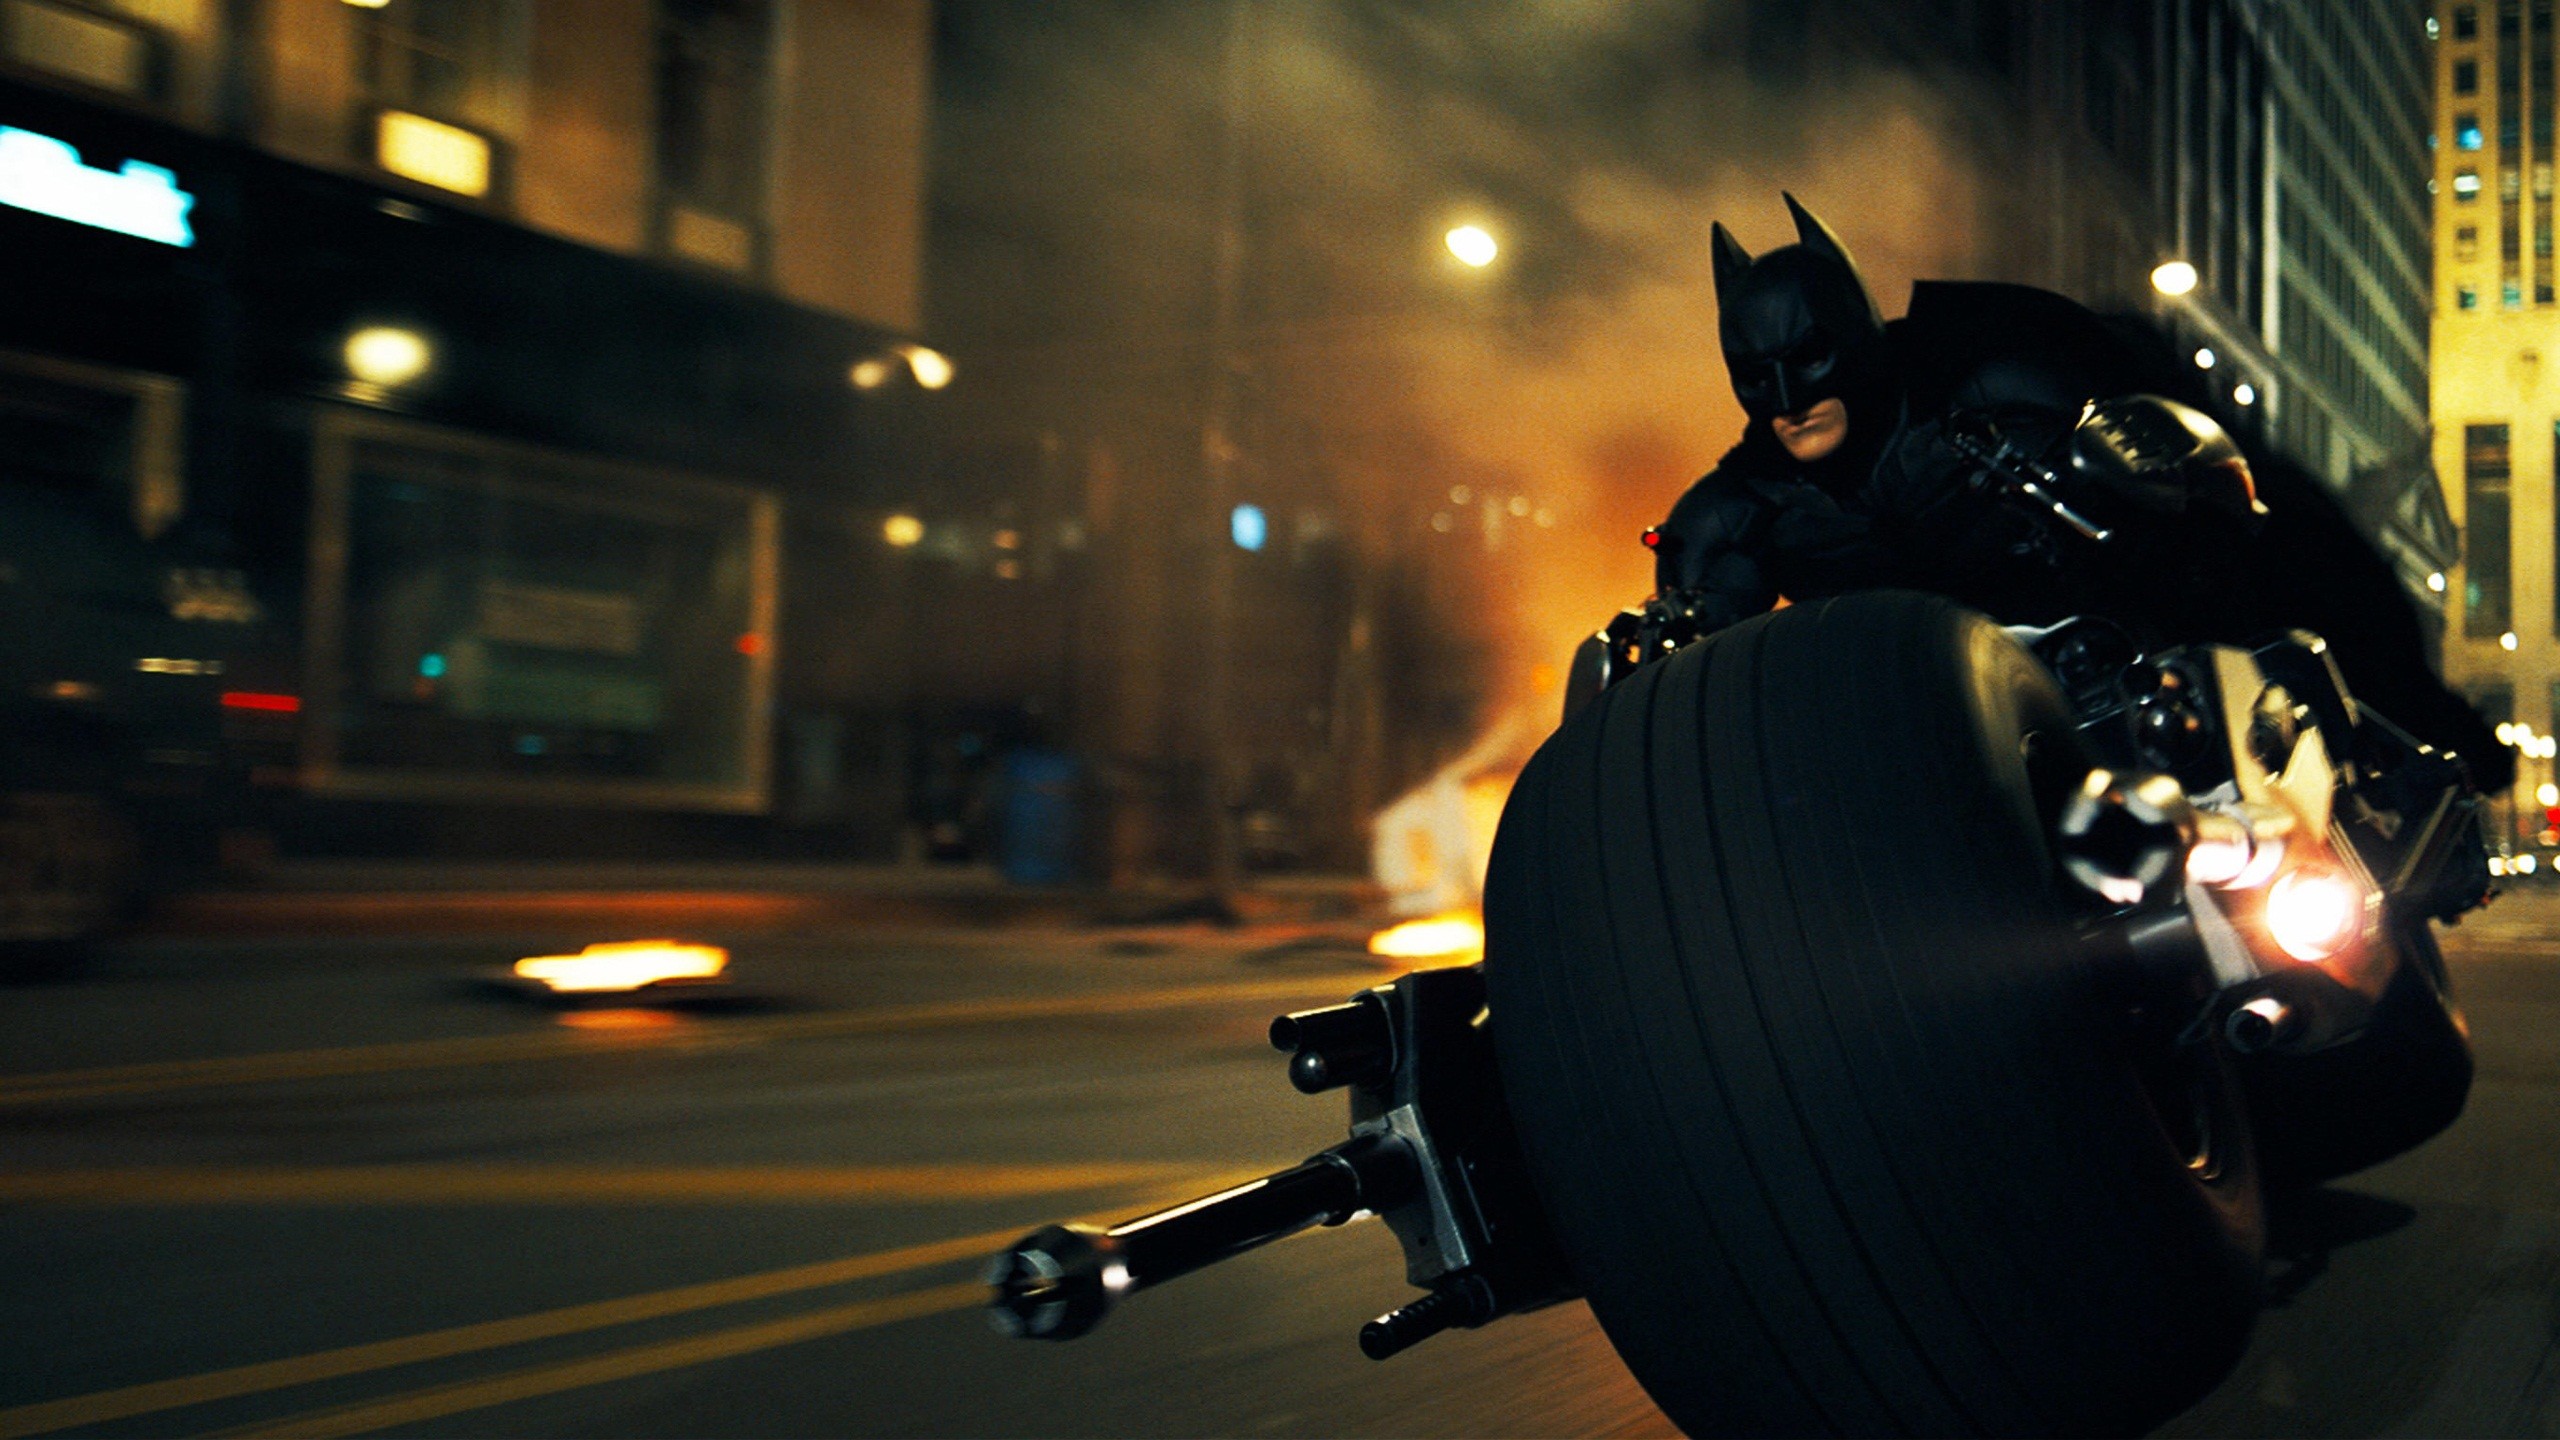 Batman The Dark Knight Rises – 1080p HD Wallpaper for Desktop